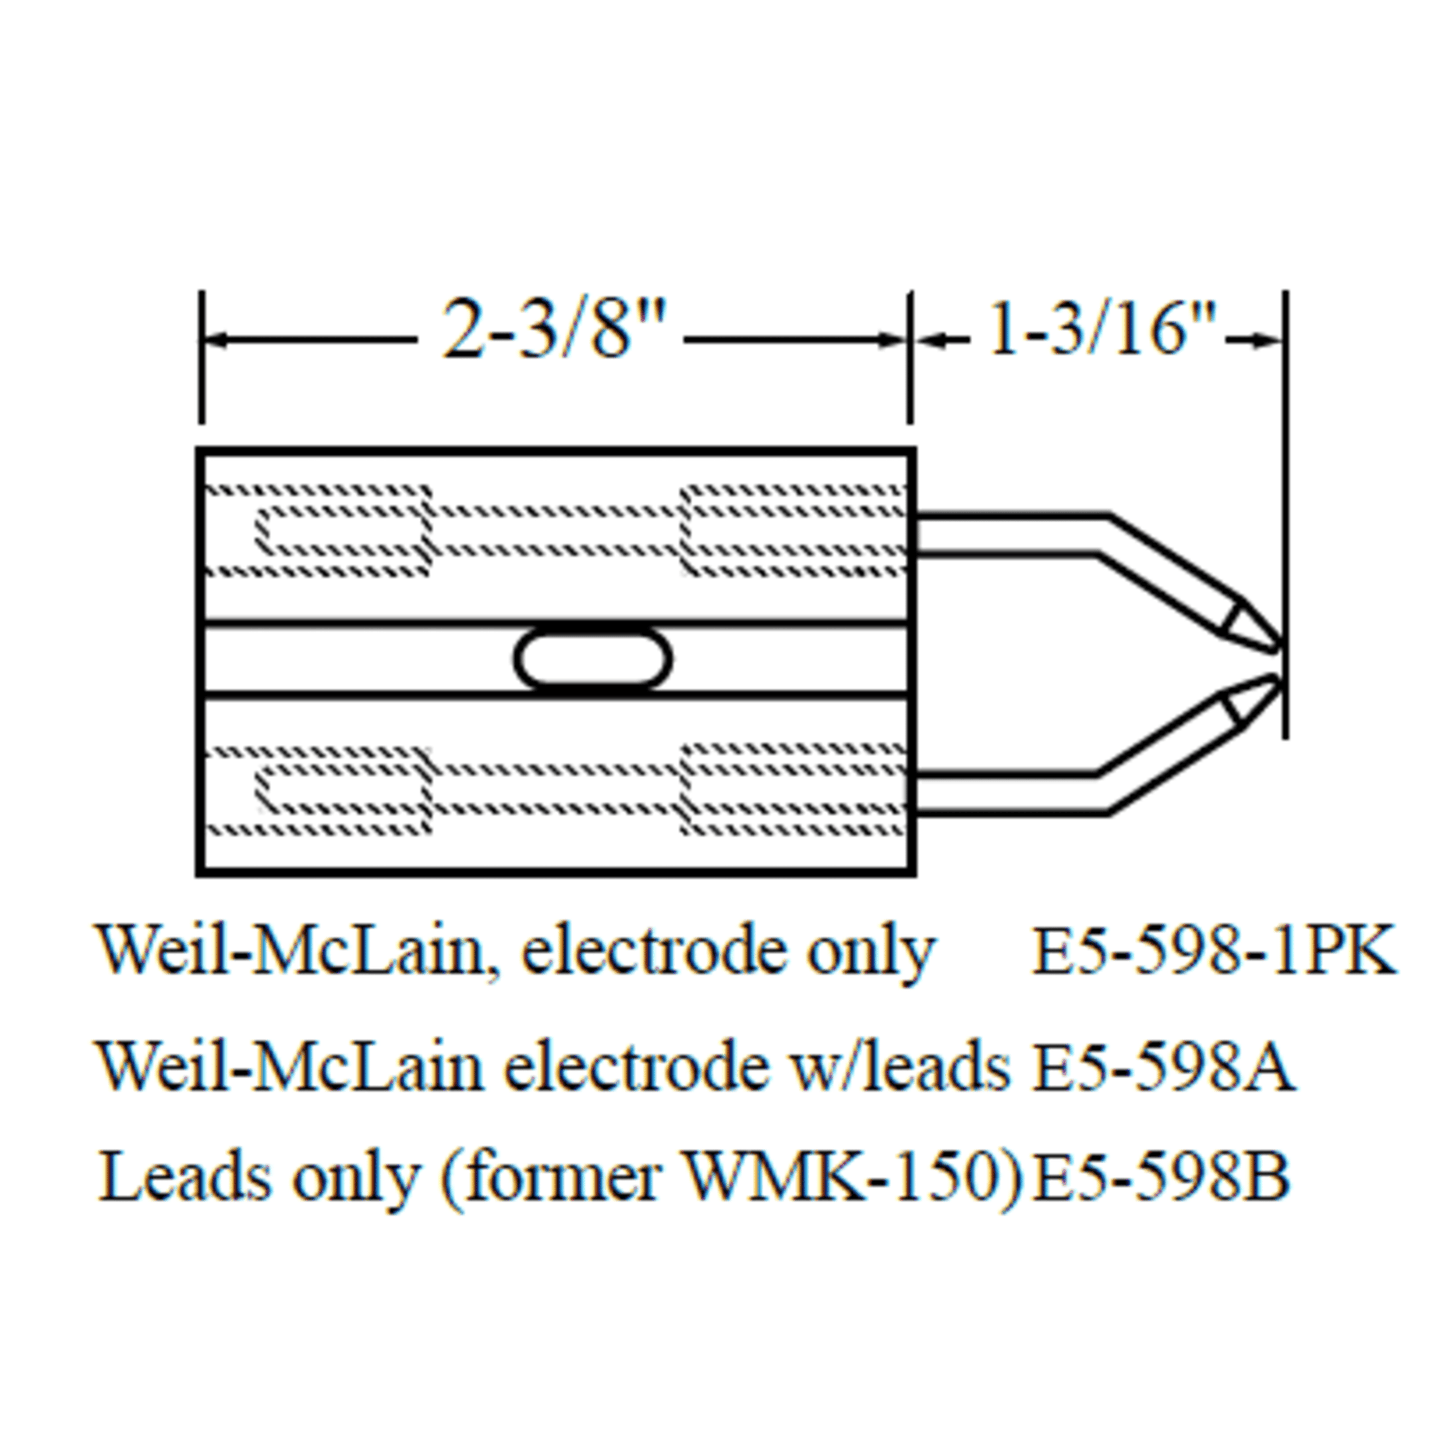 Westwood 598 Weil-Mclain Electrode